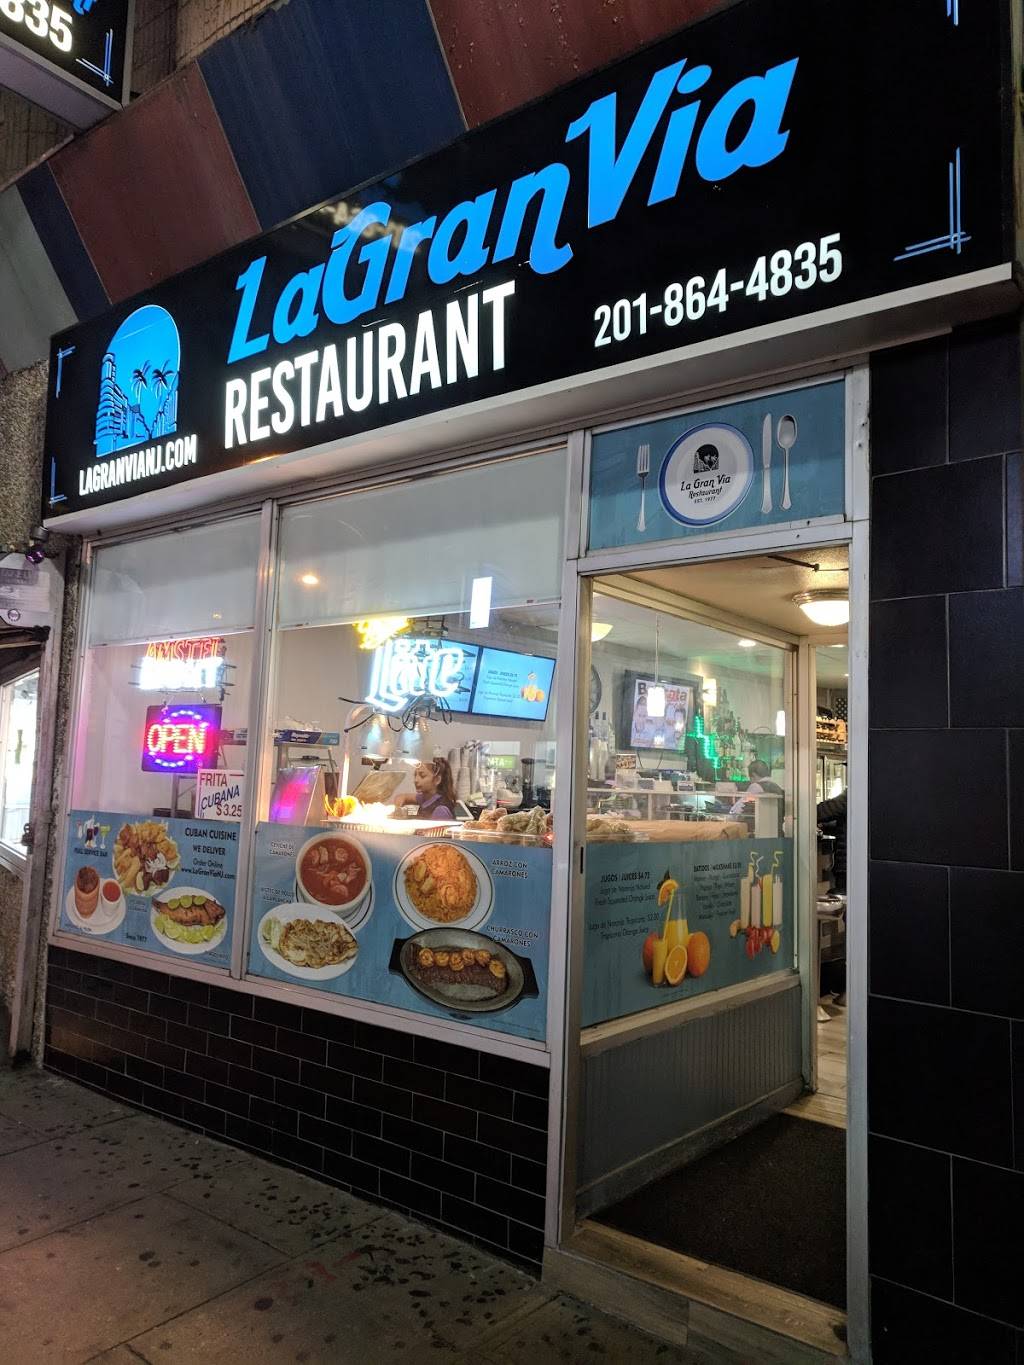 La Gran Via Restaurant | restaurant | 3905 Bergenline Ave, Union City, NJ 07087, USA | 2018644835 OR +1 201-864-4835